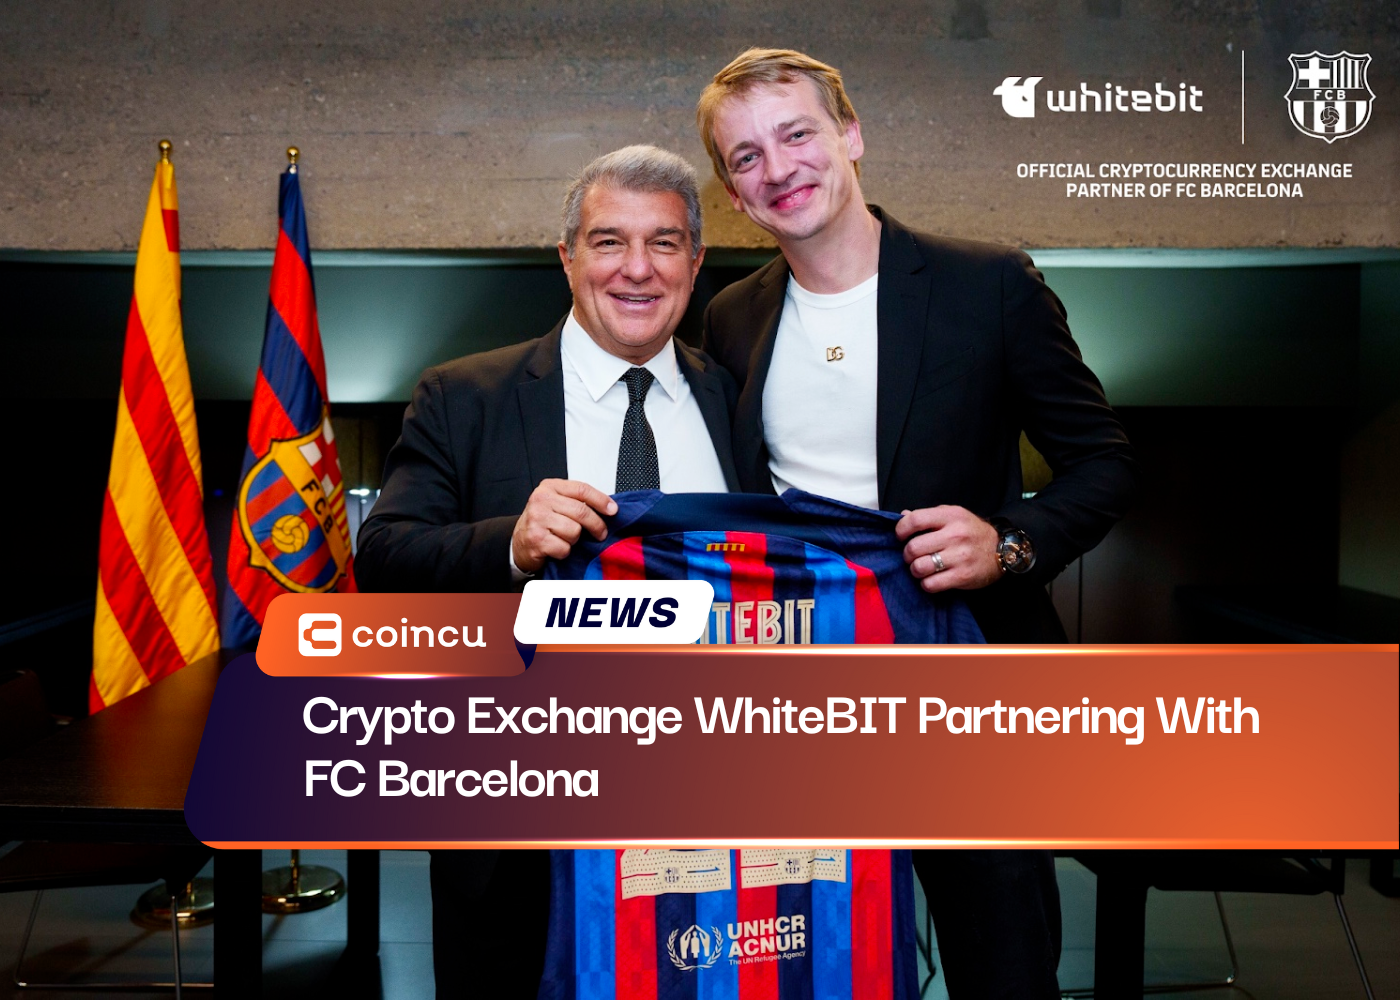 Crypto Exchange WhiteBIT Partnering With FC Barcelona